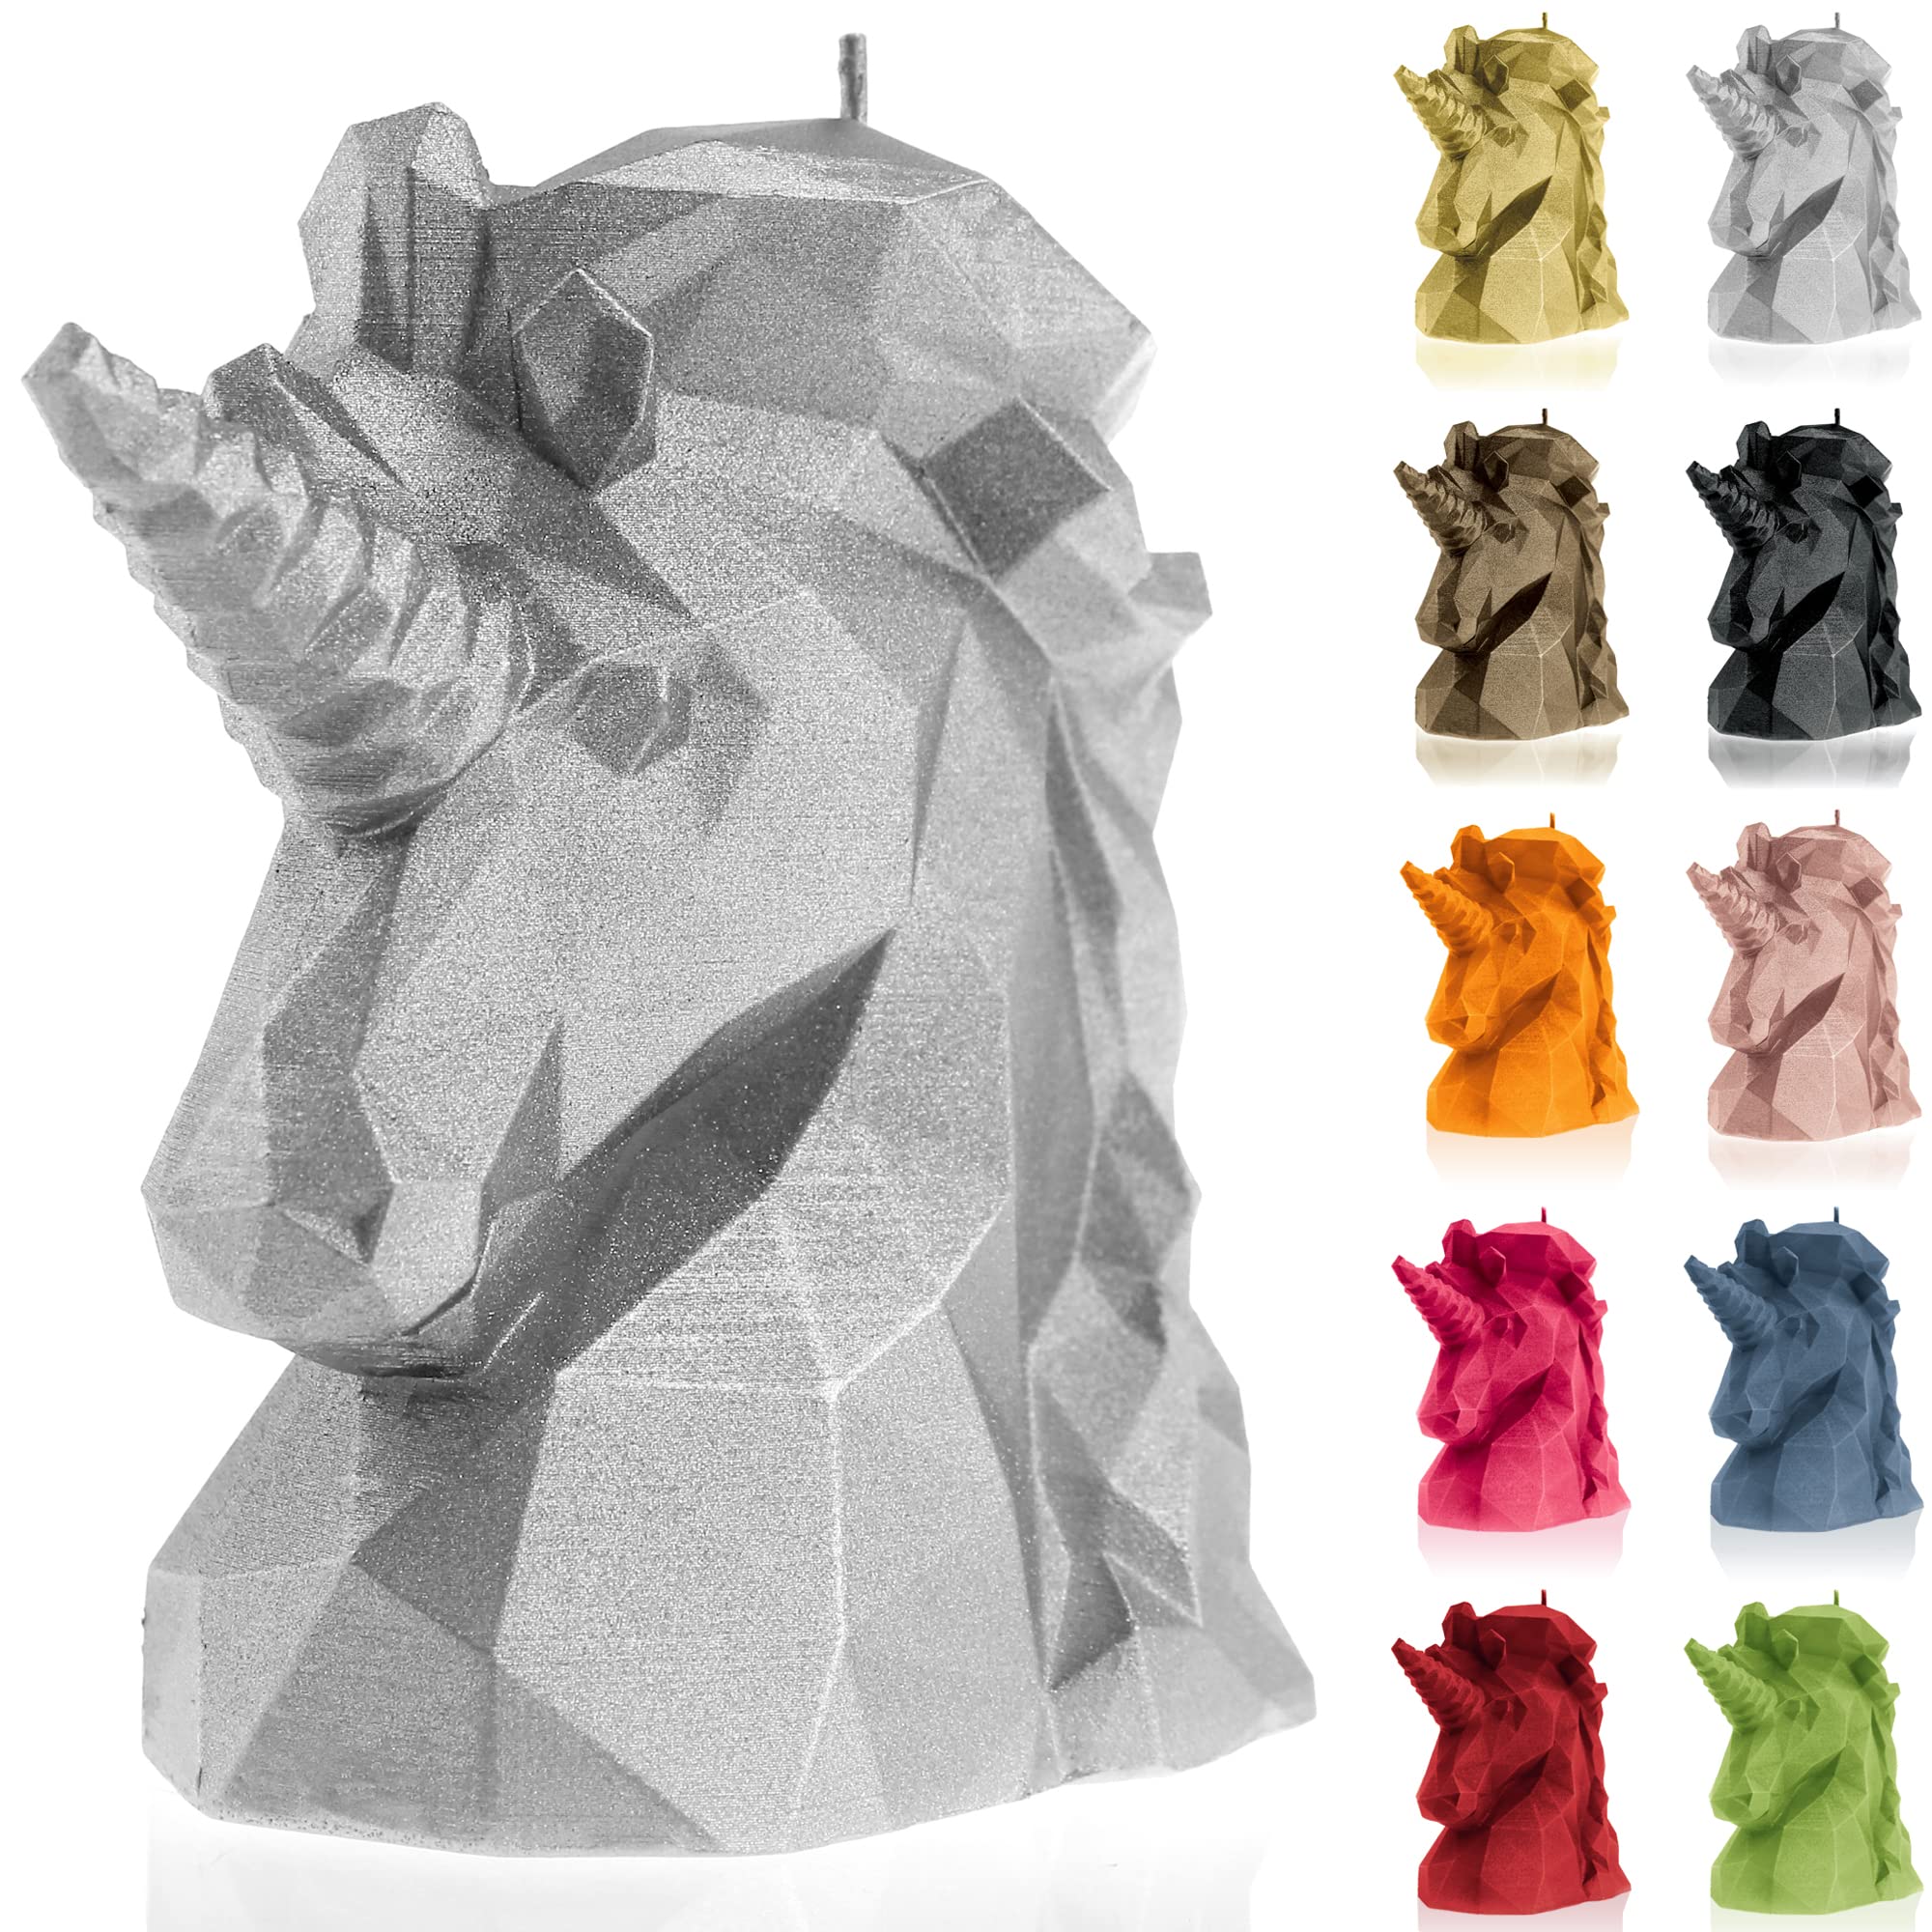 Candellana Handmade Unicorn Low-Poly Kerze Geschenk- Lustig - Dekorative Kerze - Home Décor - Geschenke für Freunde - Baumwolle Docht - Brenndauer 74h - Silver Kerze